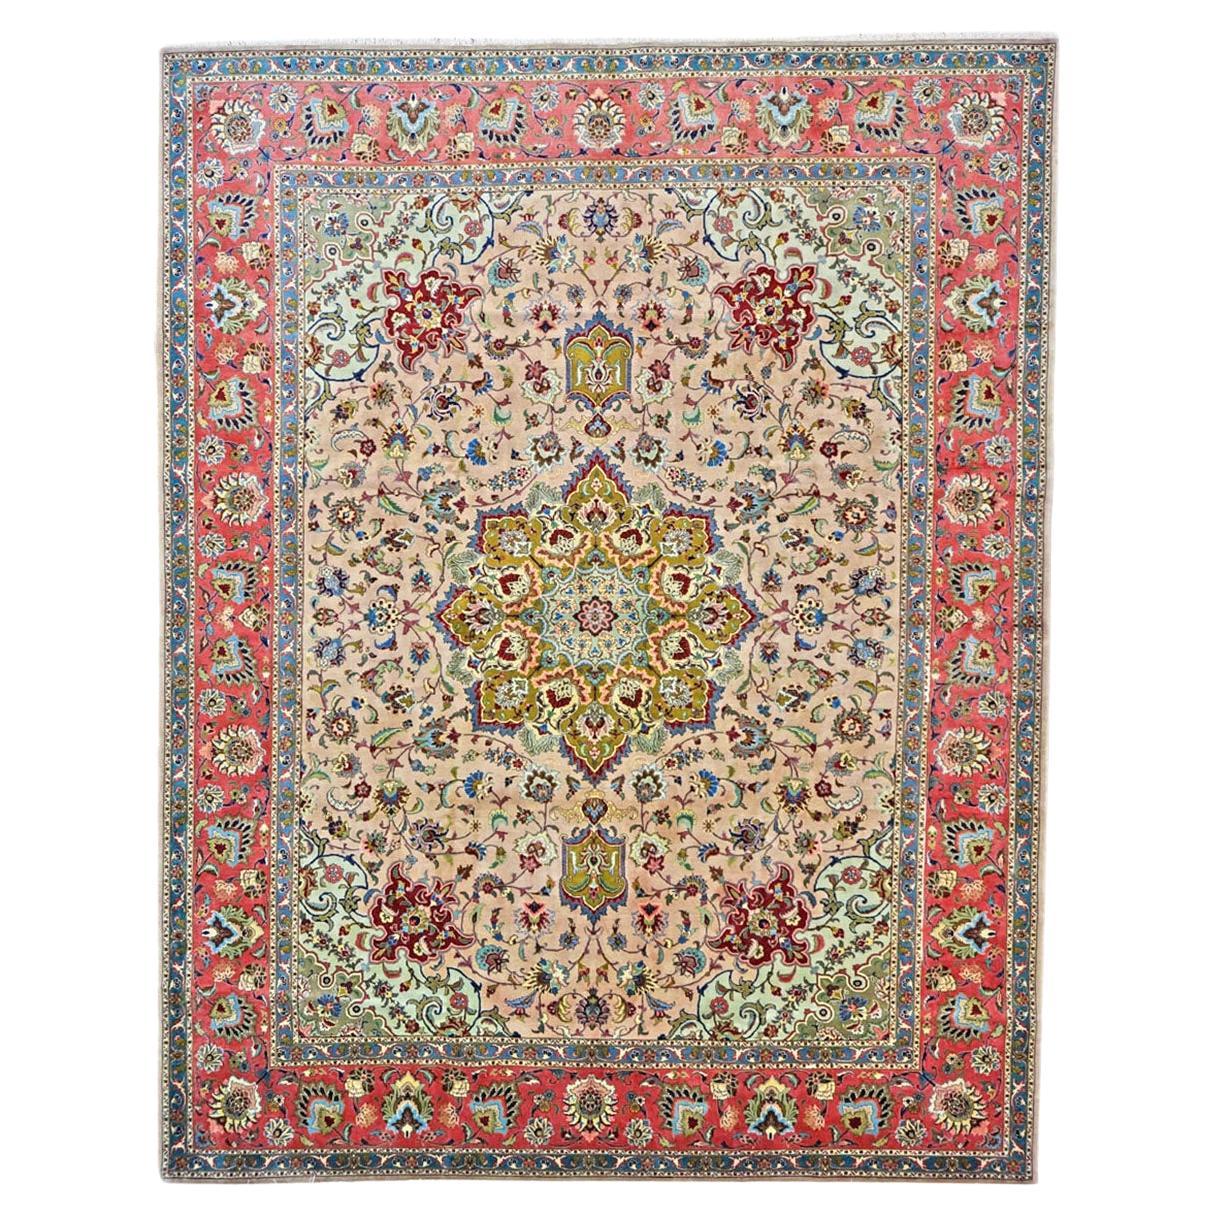 Antique Persian Tabriz 9x12 Red, Green, & Ivory Handmade Area Rug